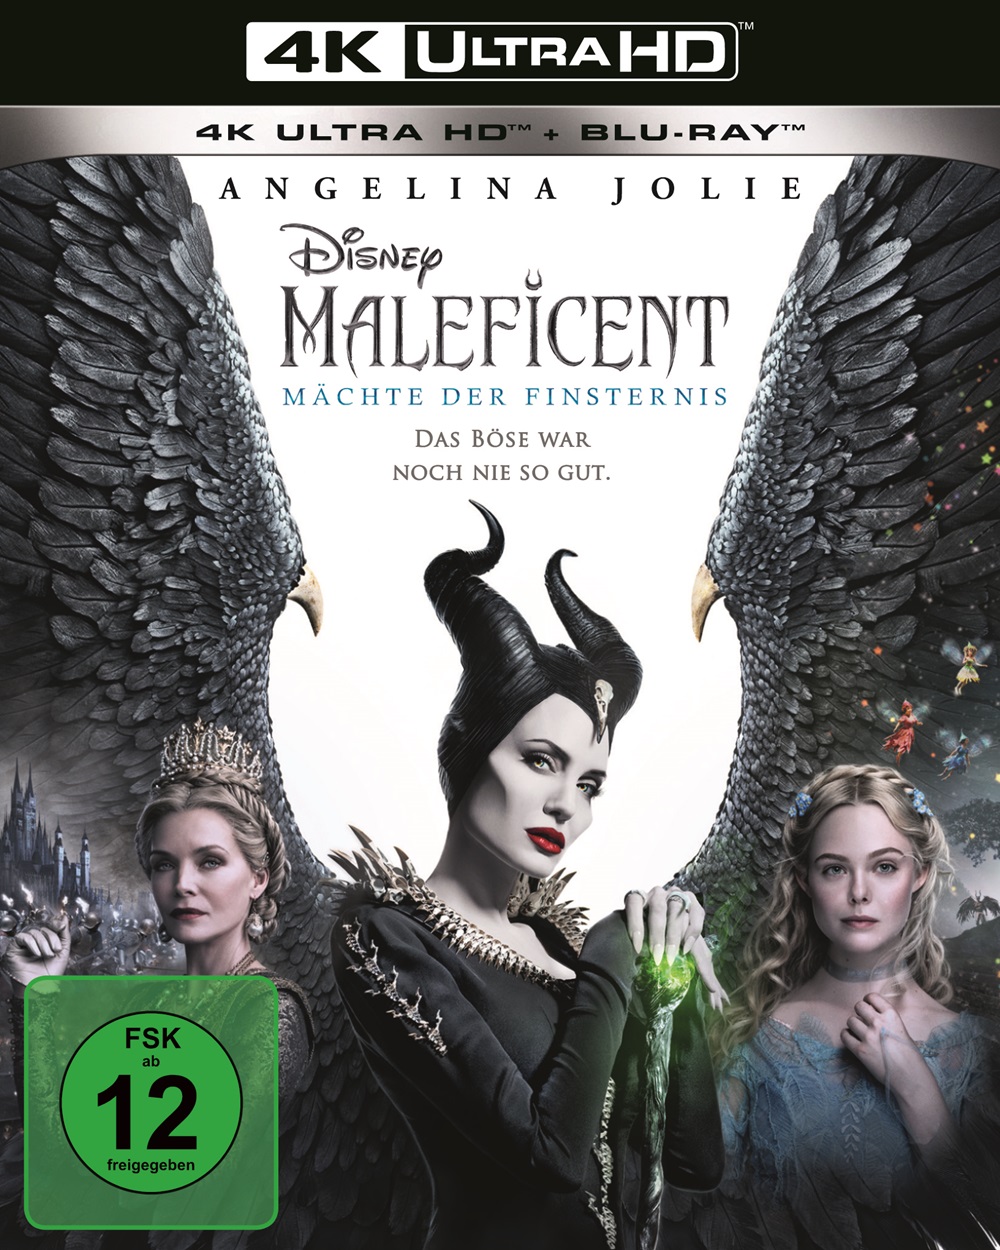 maleficent maechte der finsternis 4k uhd bd review cover